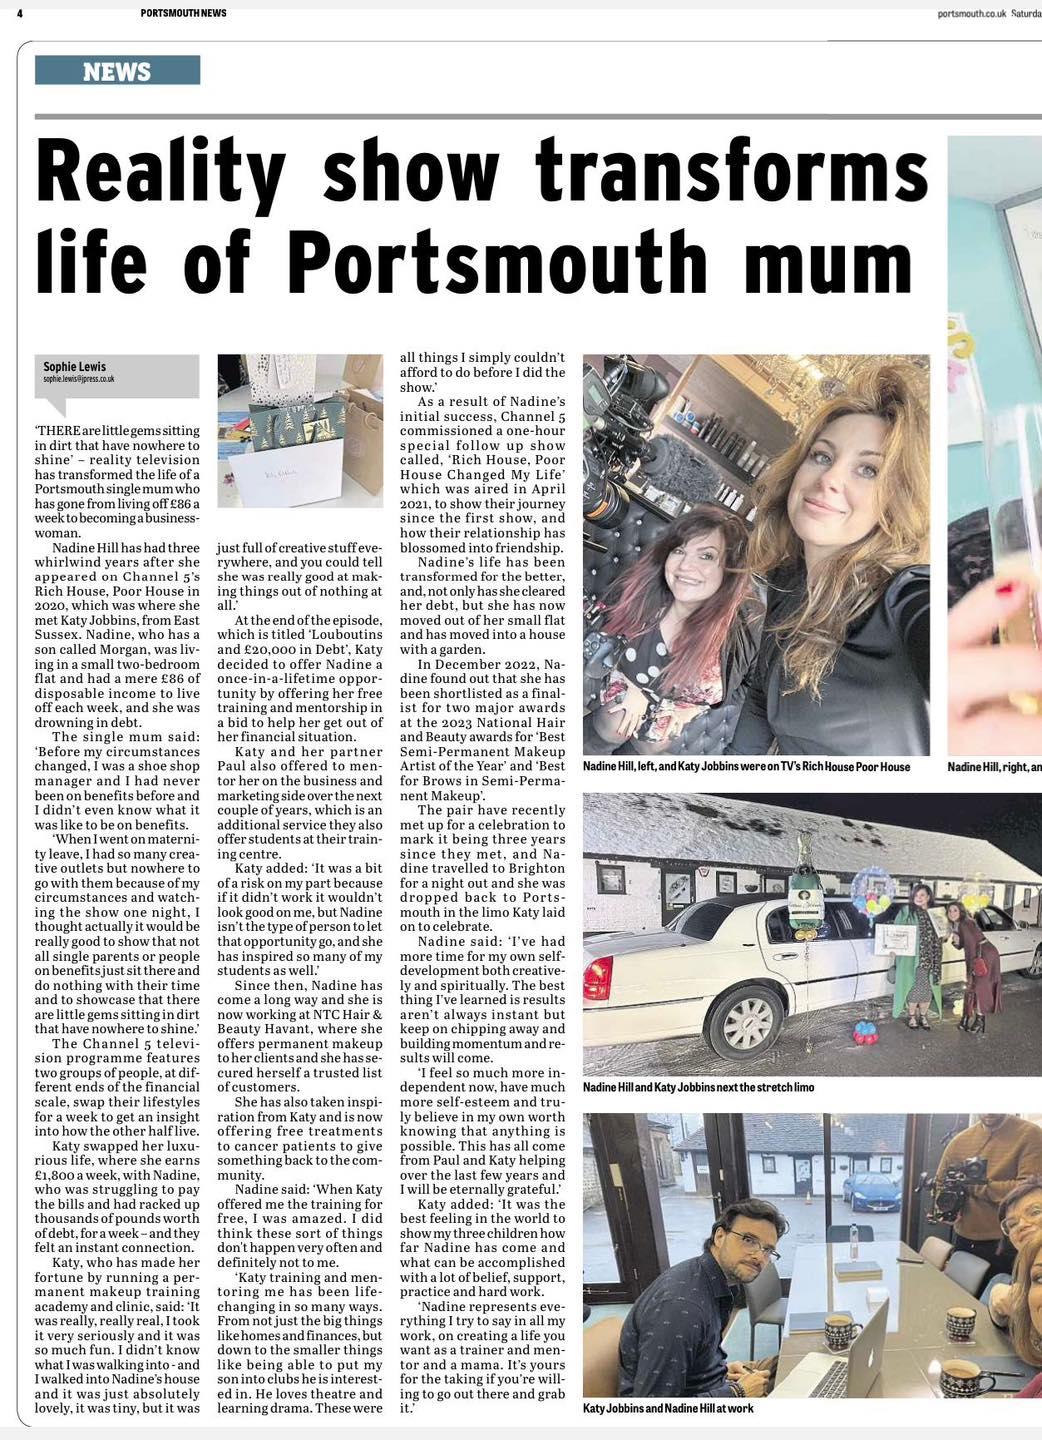 Portsmouth newspaper 5